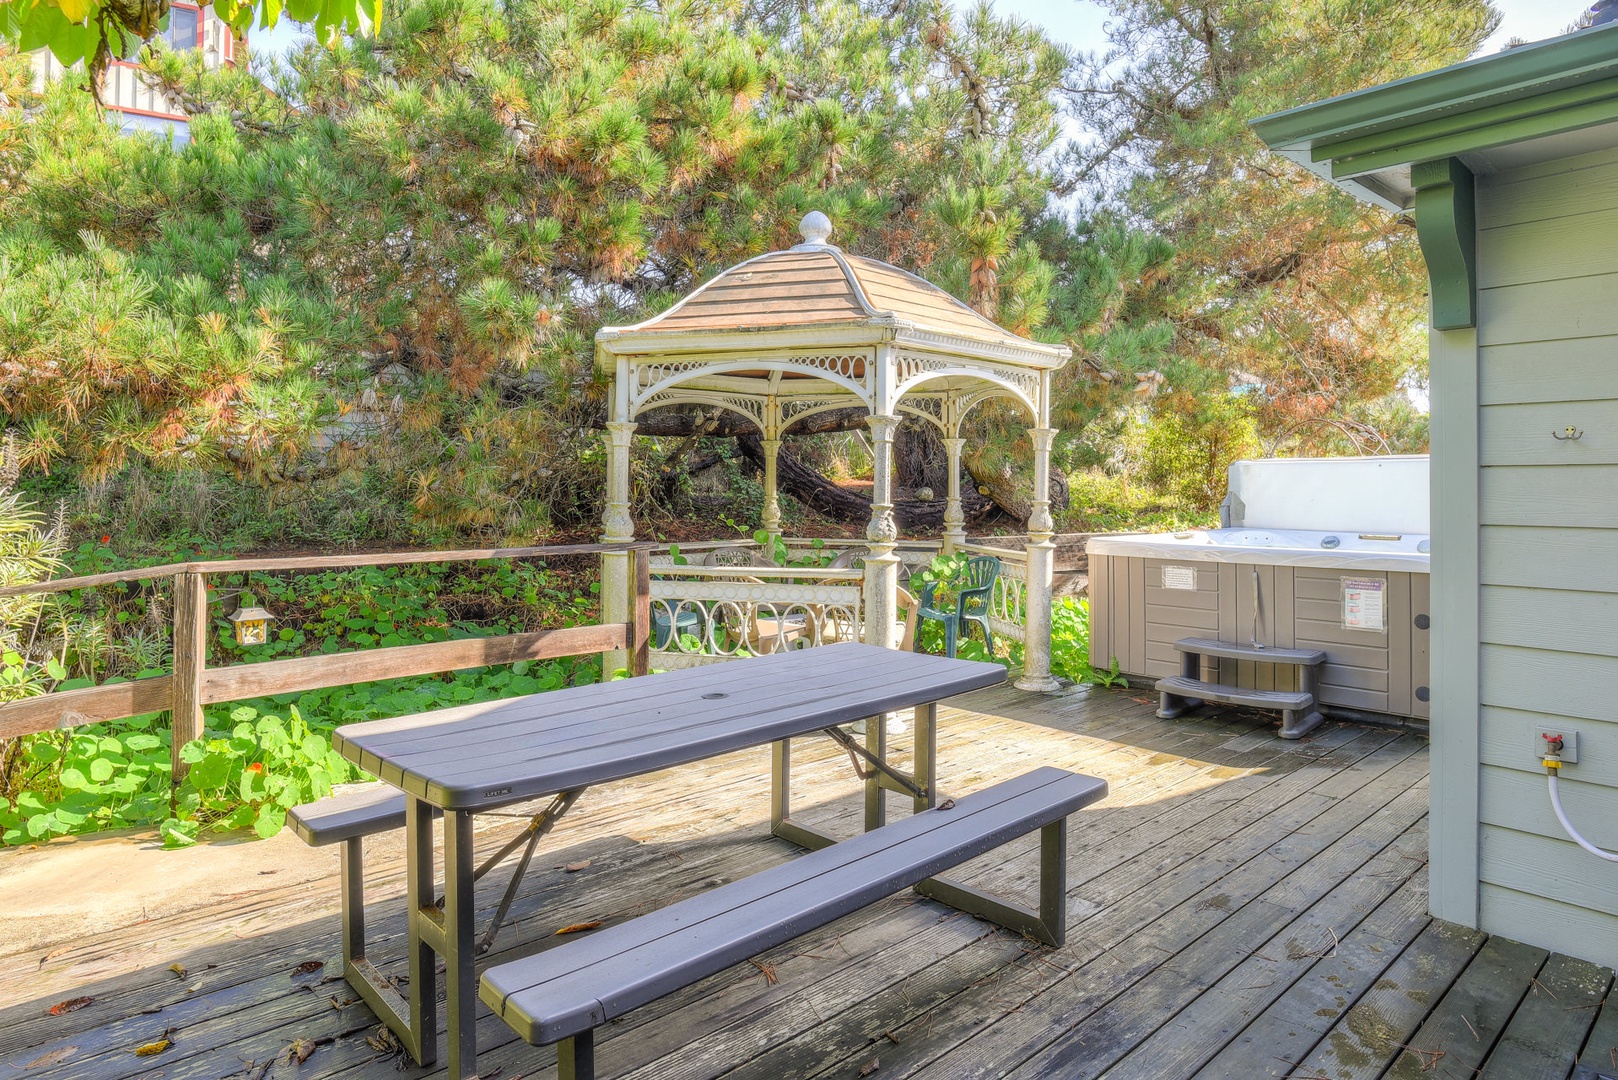 Back yard with gazebo, outdoor seating